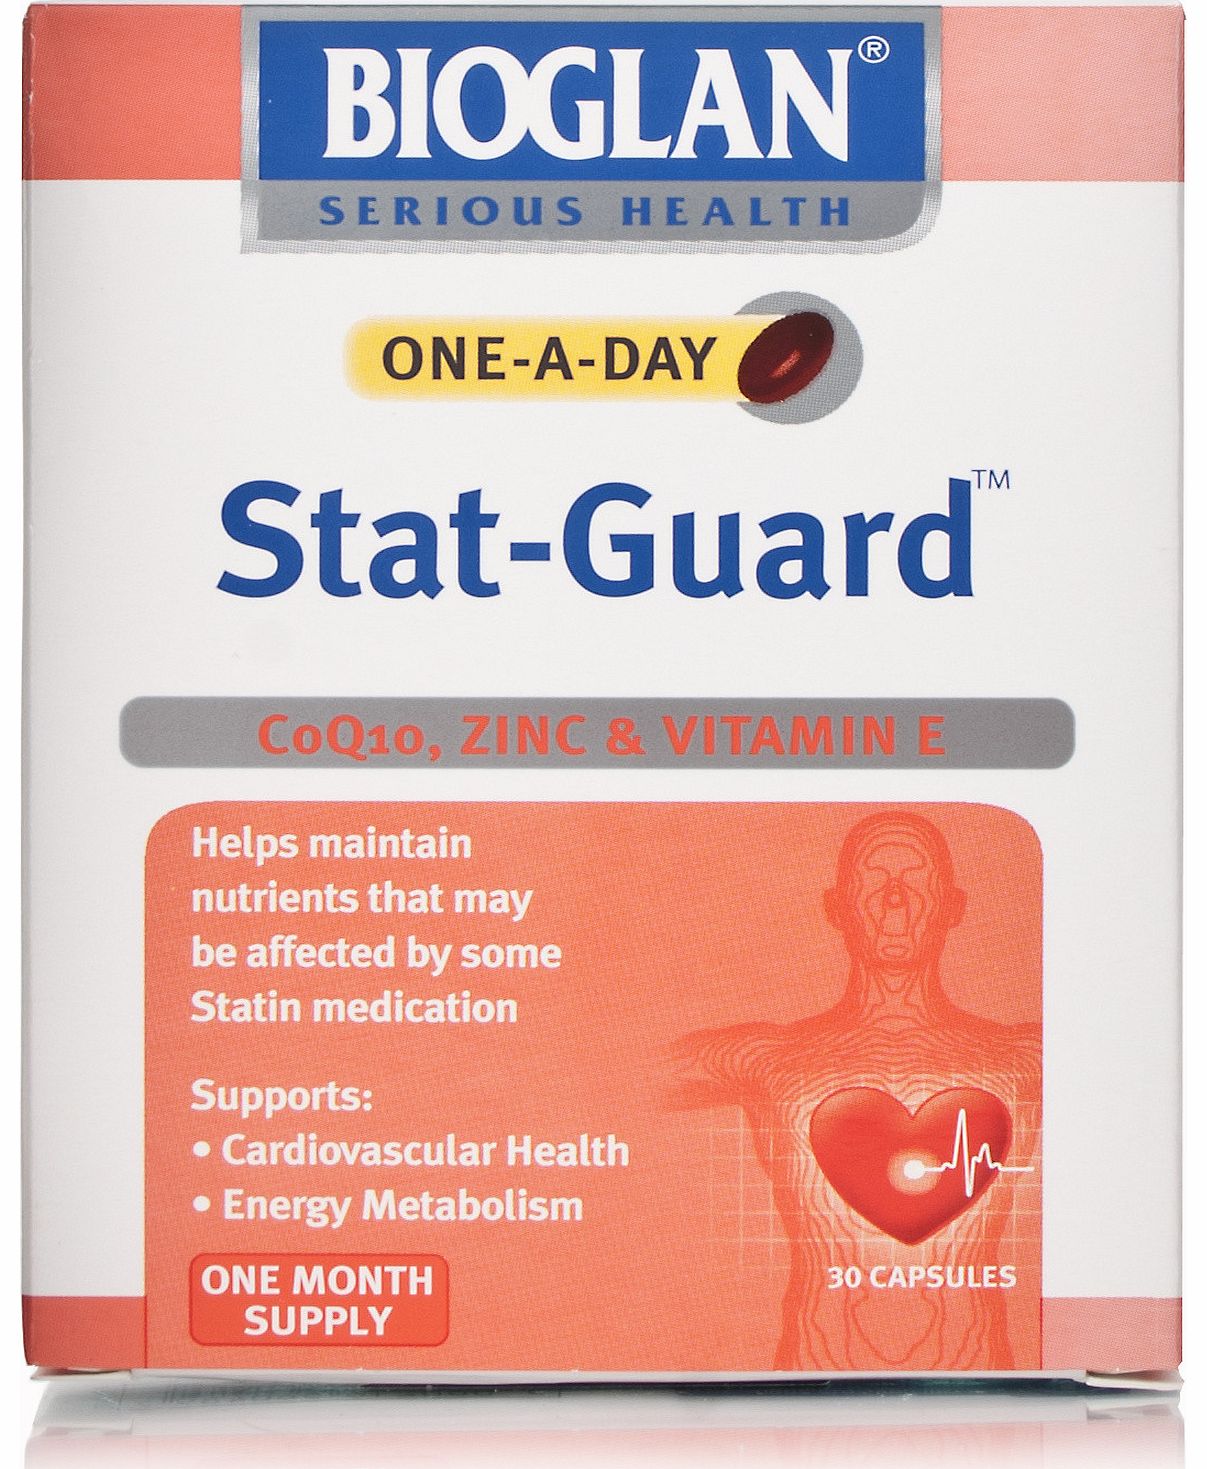 Bioglan Stat Guard